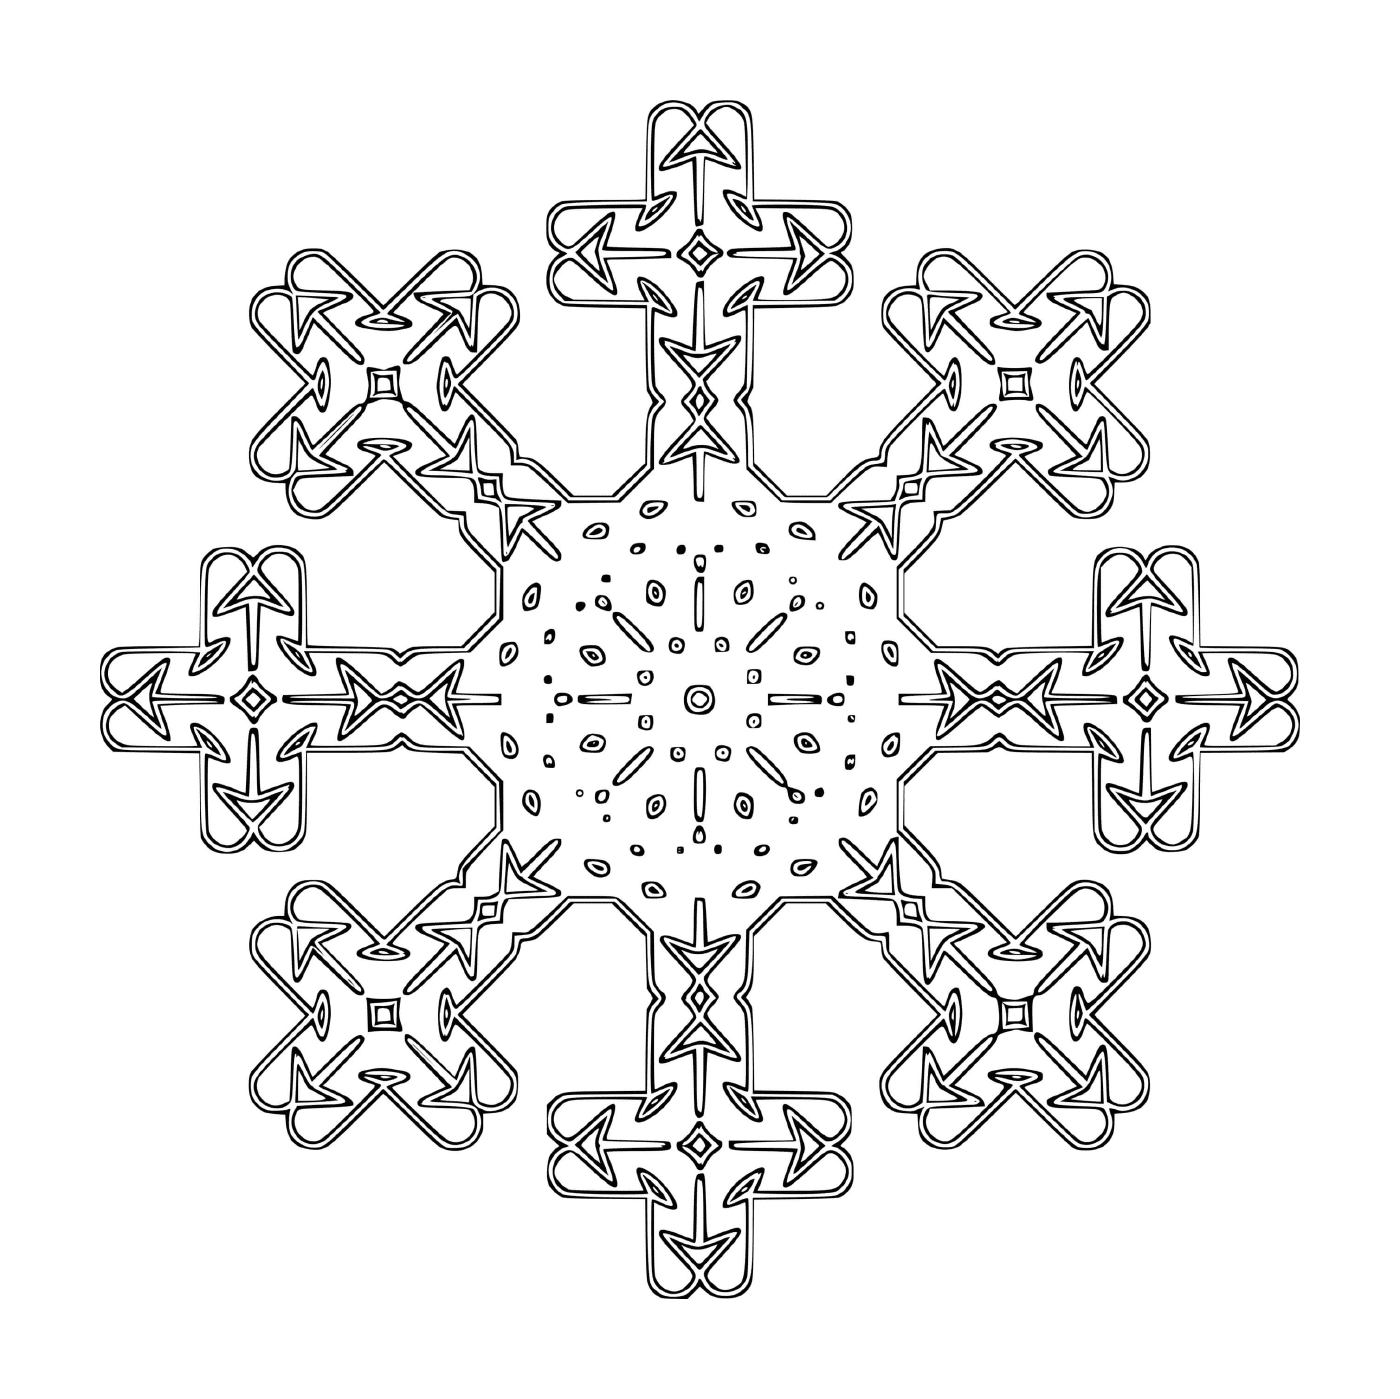  An original cross-shaped snowflake 